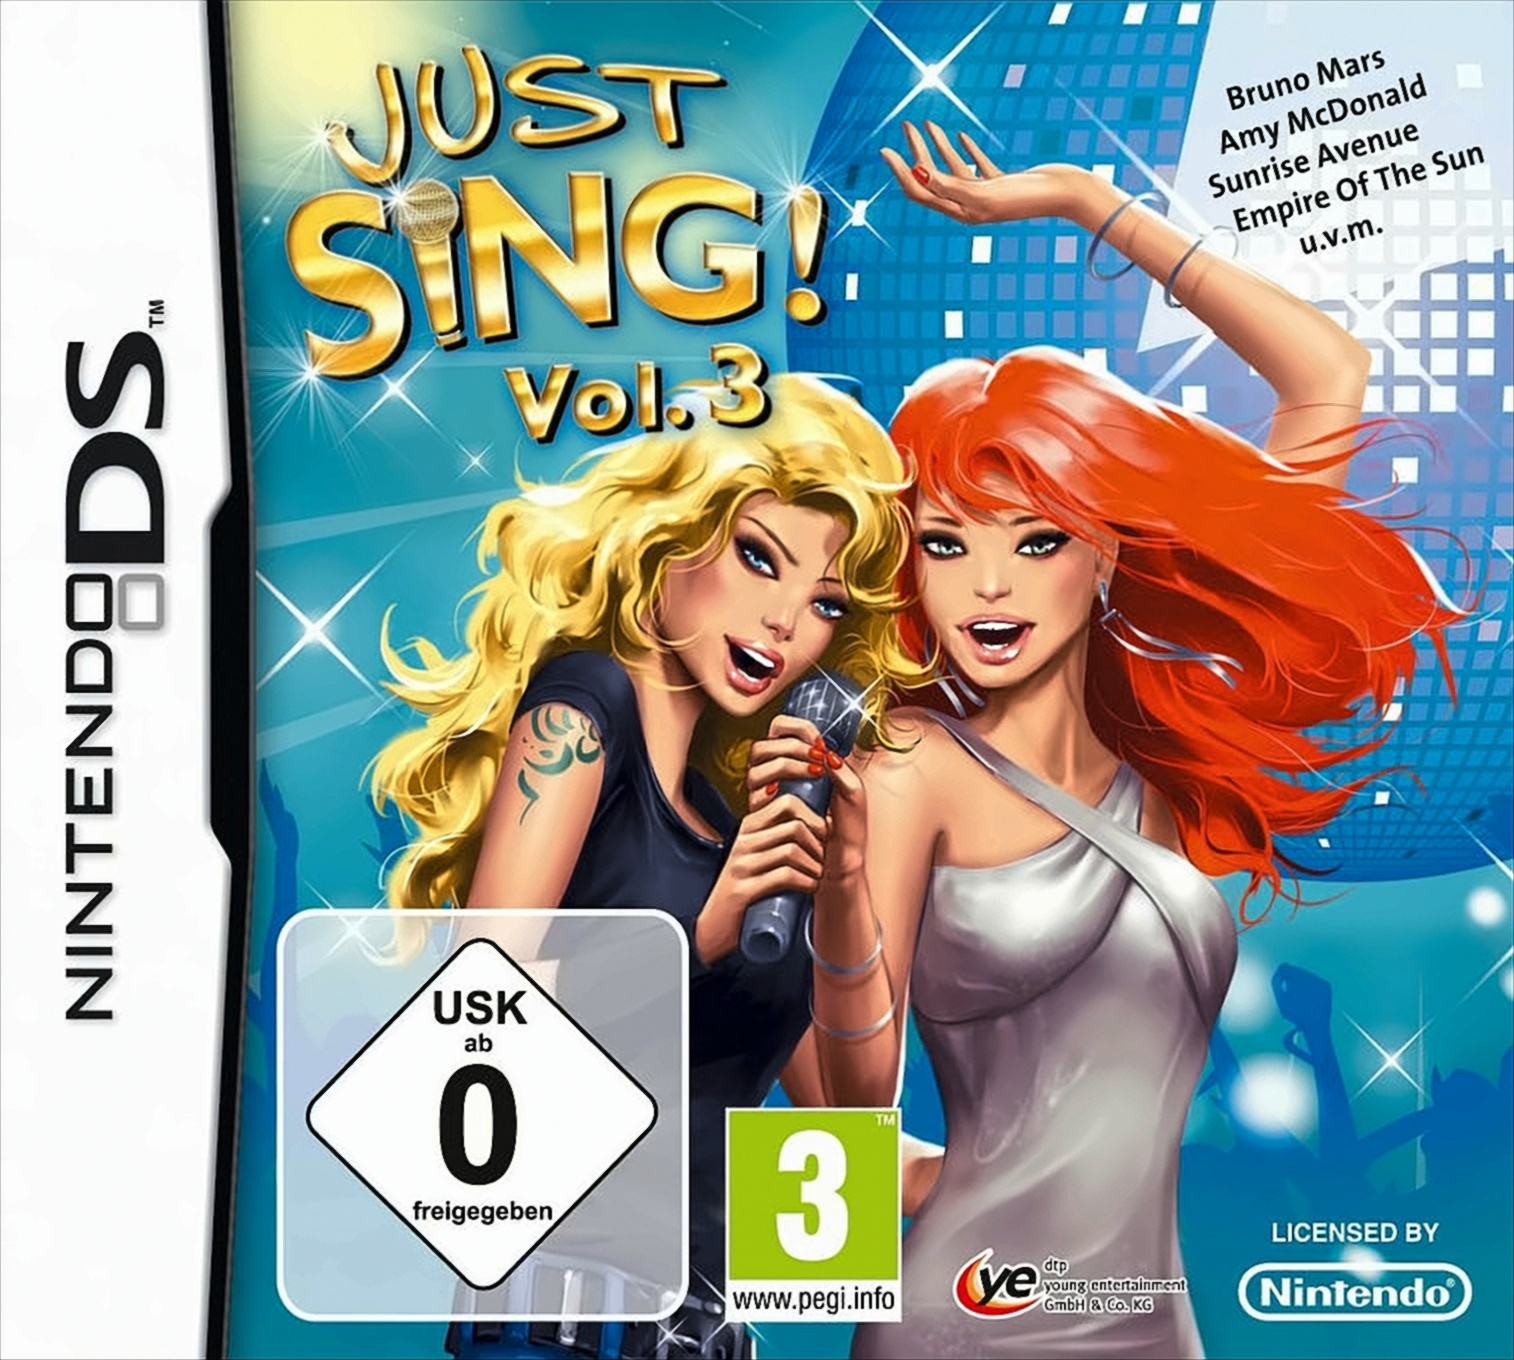 Just Vol. 3 Sing! DS] - [Nintendo